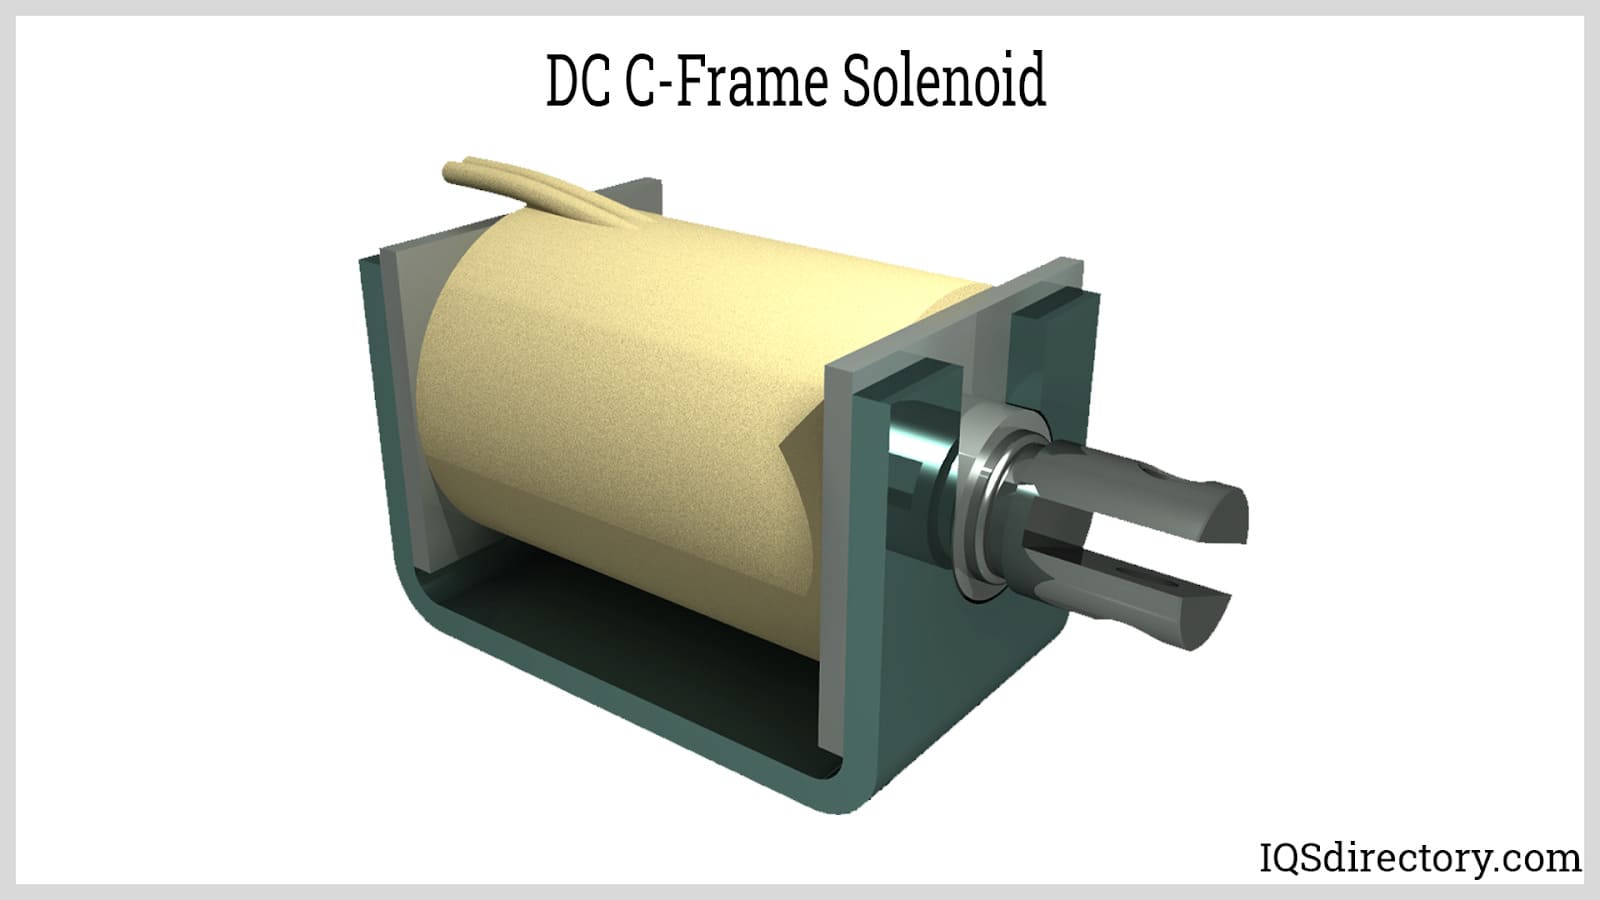 DC C-Frame Solenoid